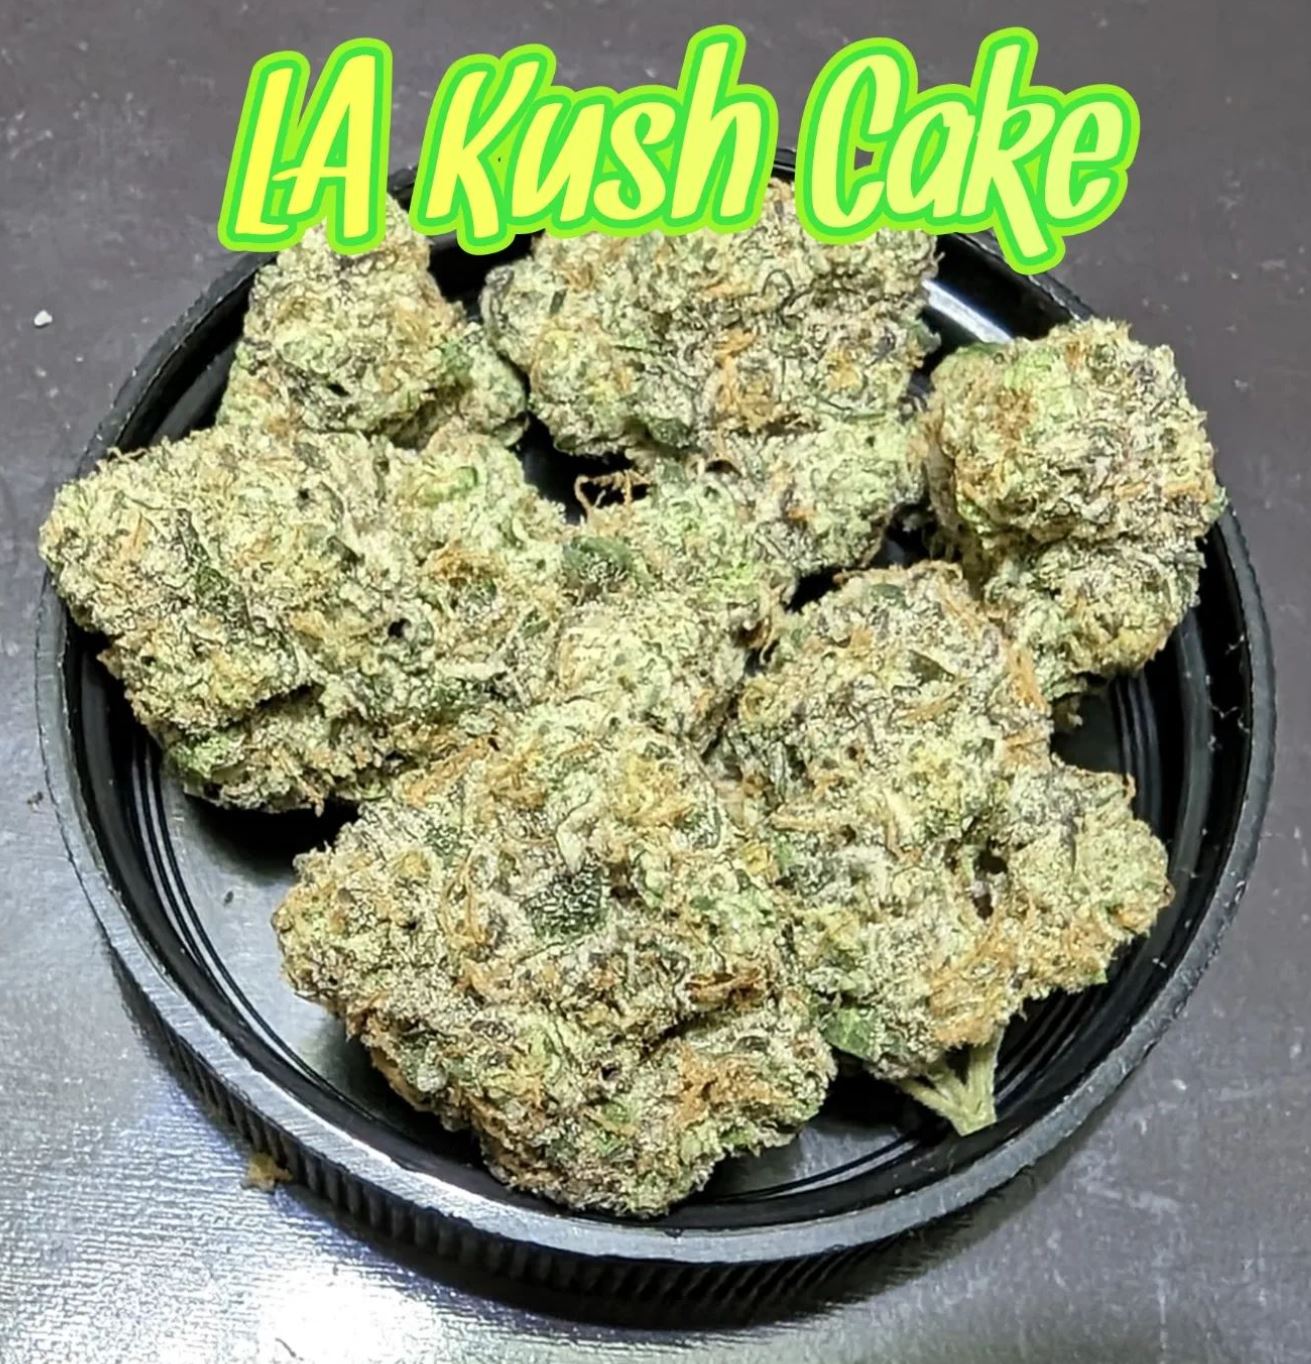 LA Kush Cake Weed Strain Reviews, Information & Effects